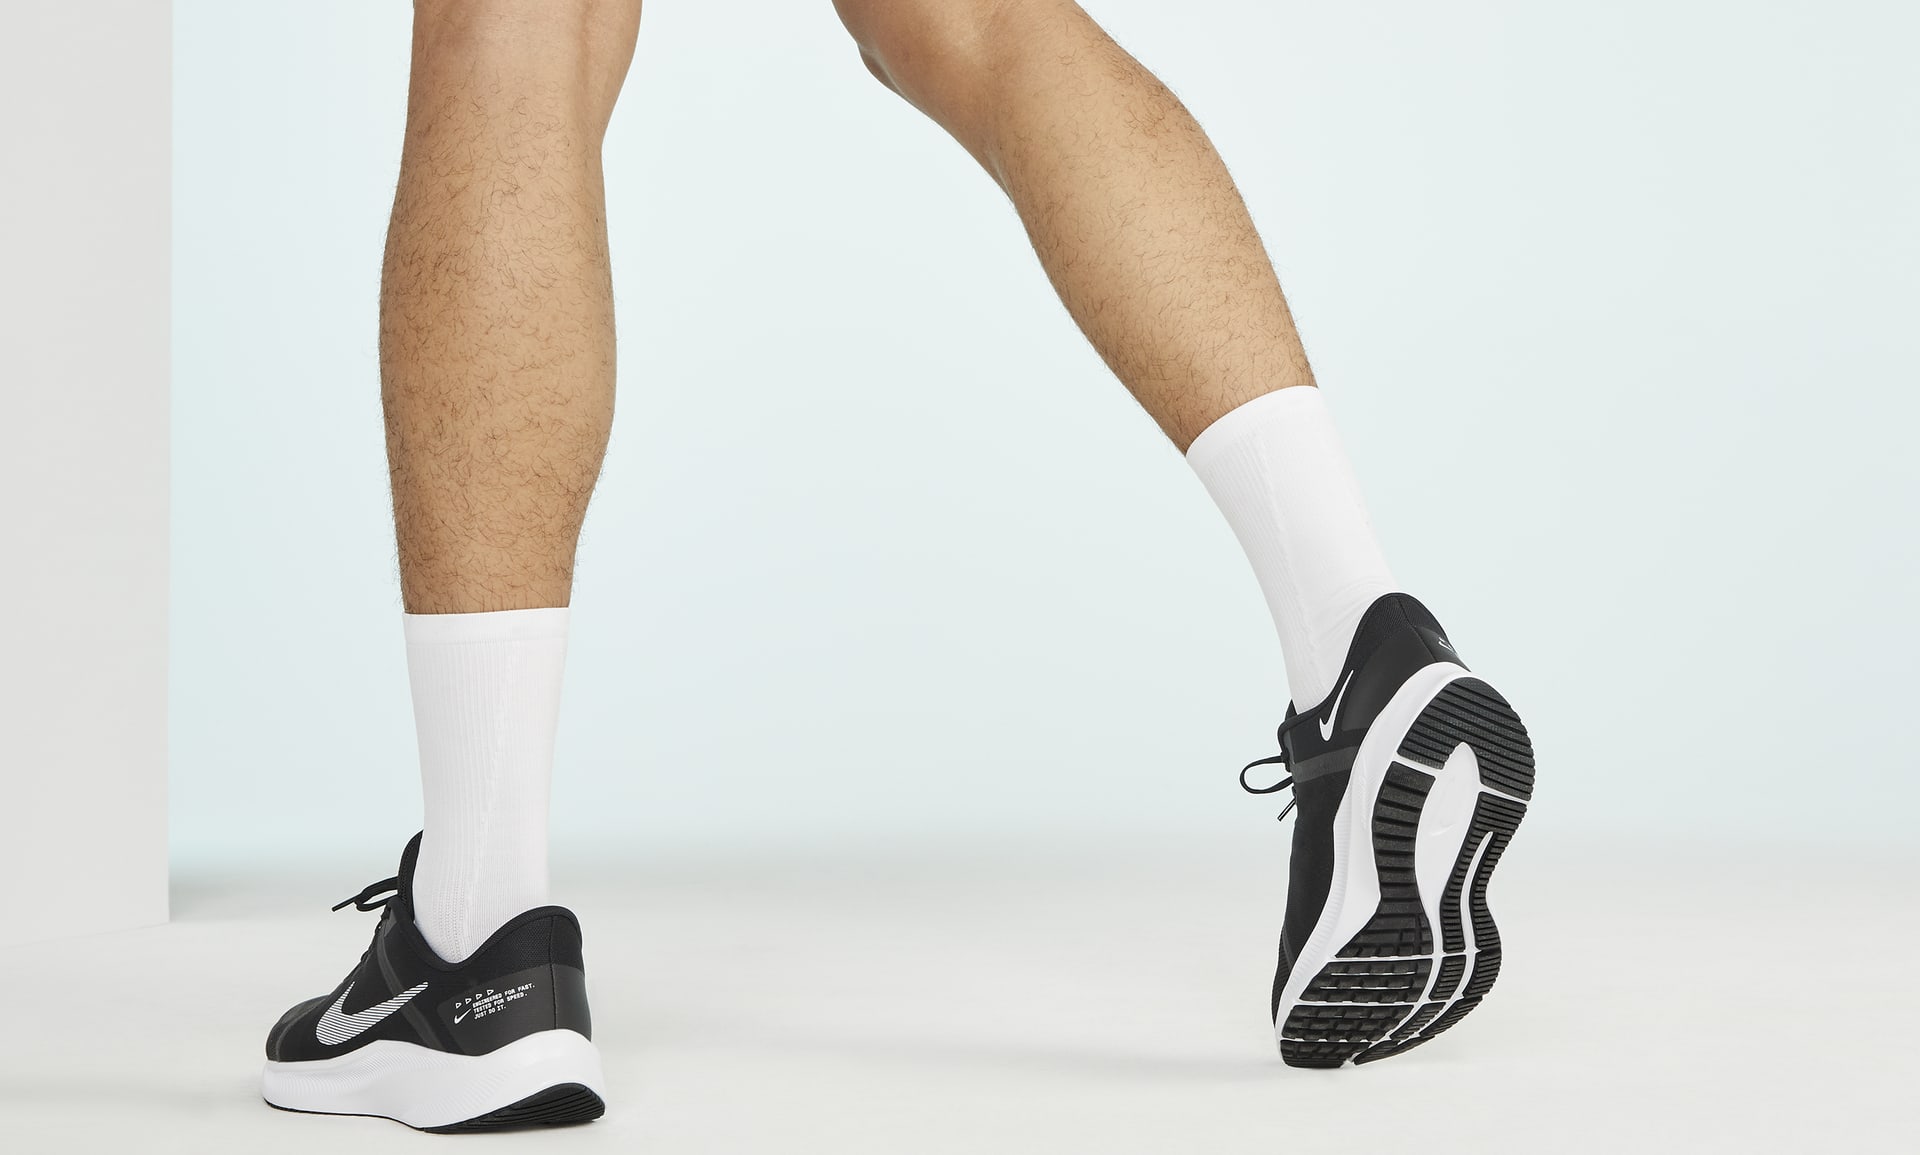 Quest Men's Road Running Shoes. Nike.com